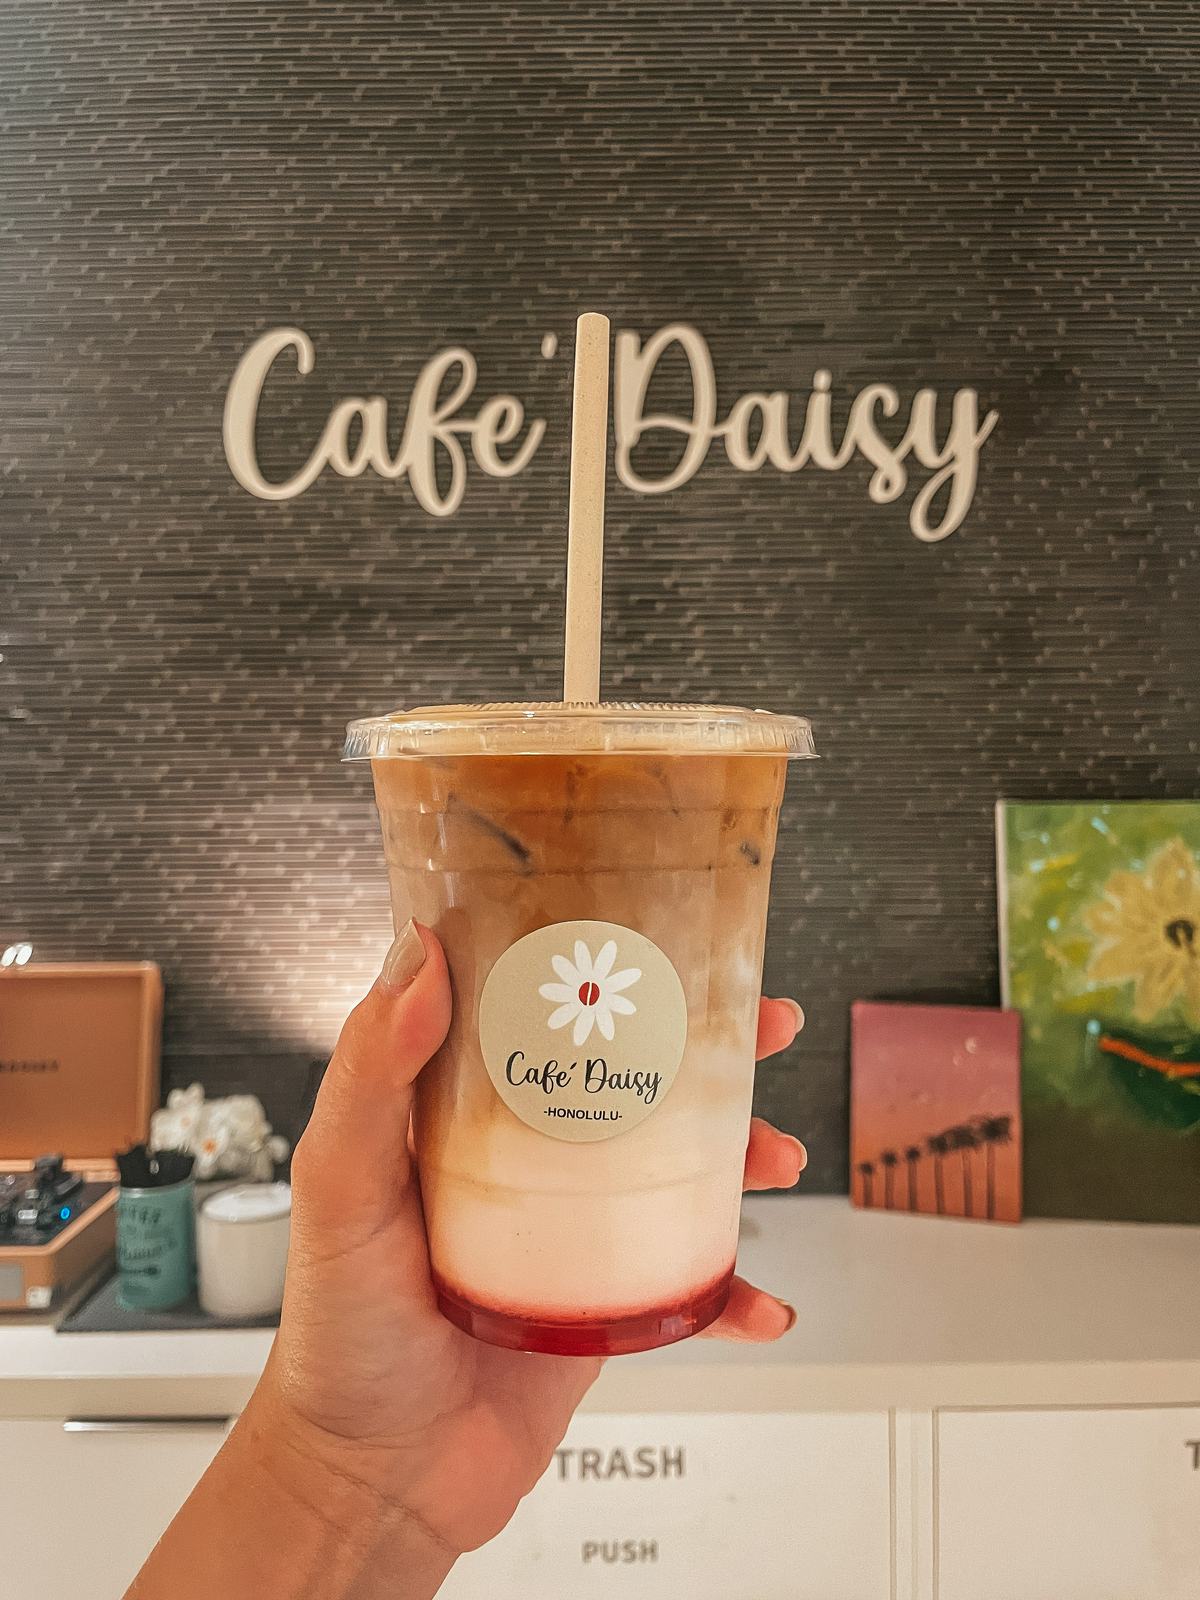 Iced latte from Cafe Daisy Honolulu coffee shop